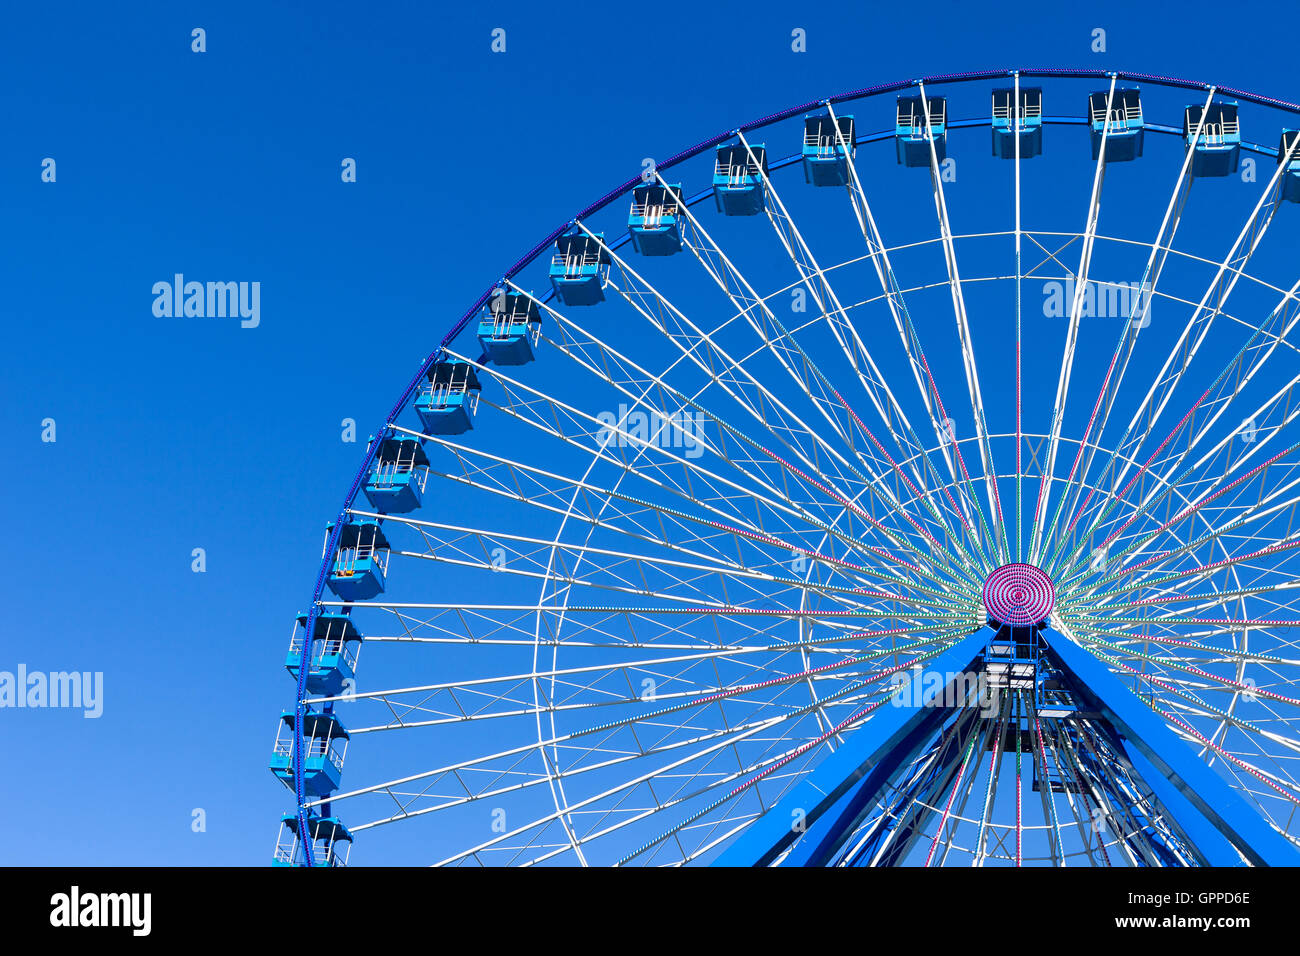 Ruota panoramica Ferris con cielo blu in background Foto Stock